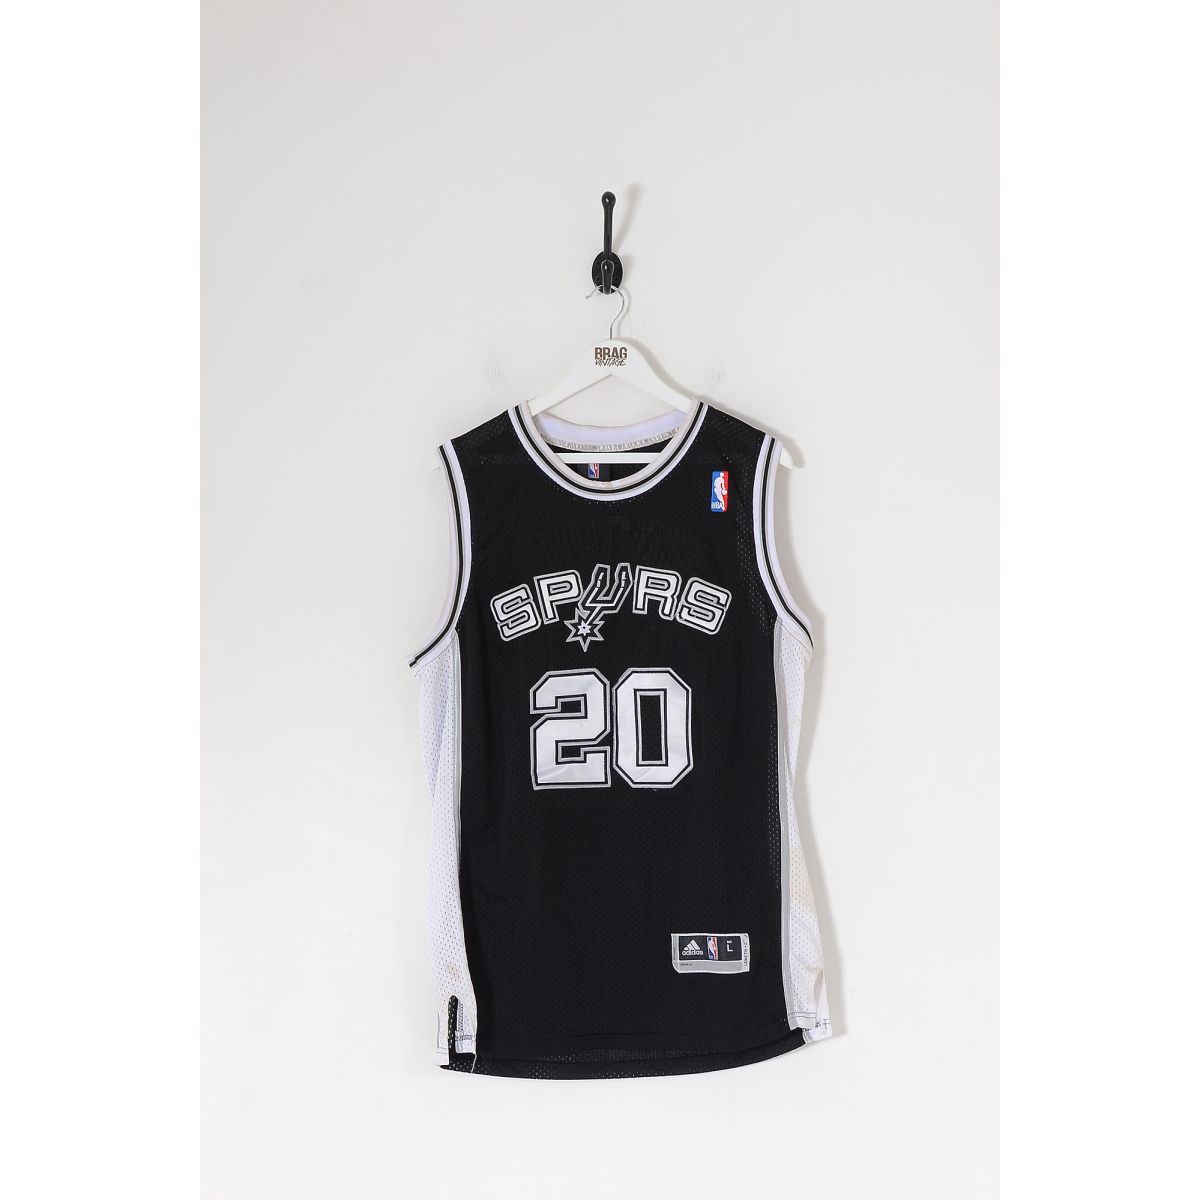 Vintage ADIDAS NBA San Antonio Spurs Ginobili Basketball Sports Vest Black Large